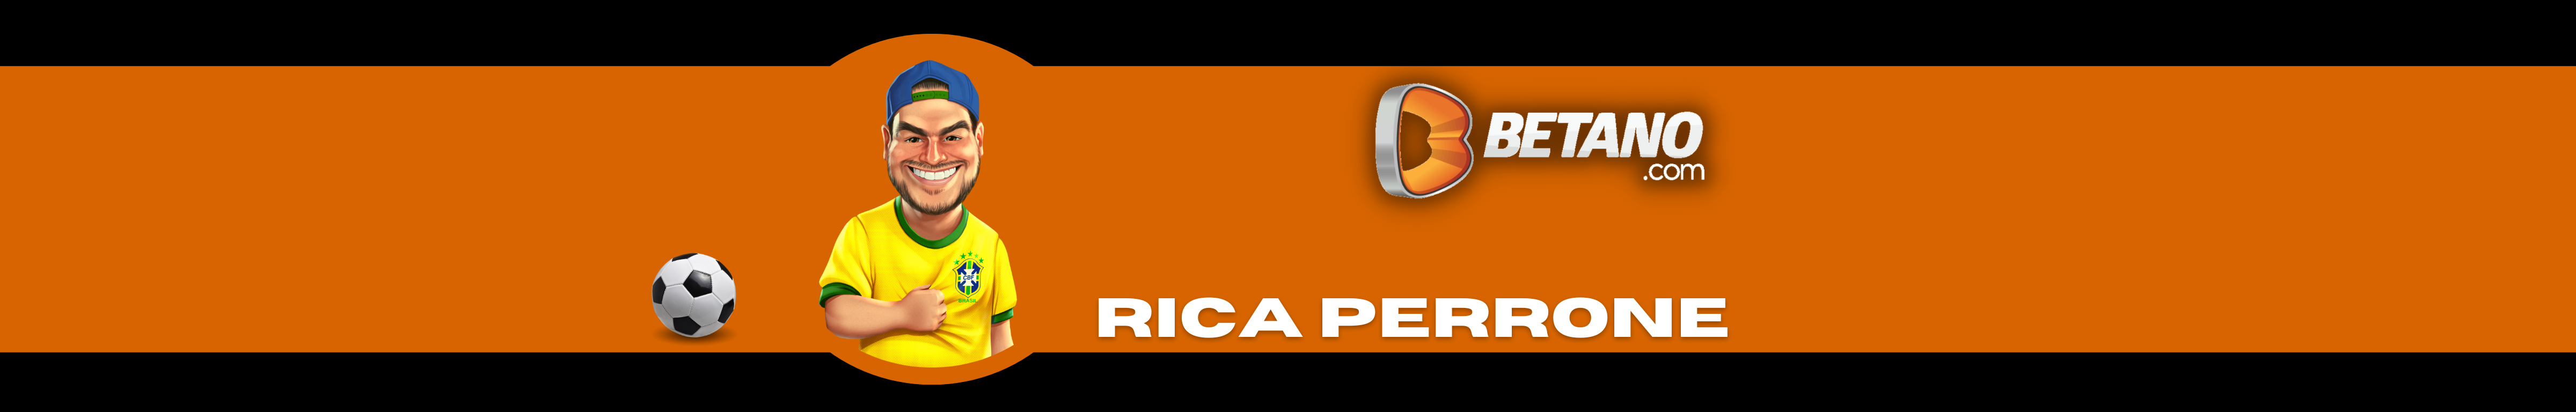 Blog do Rica Perrone